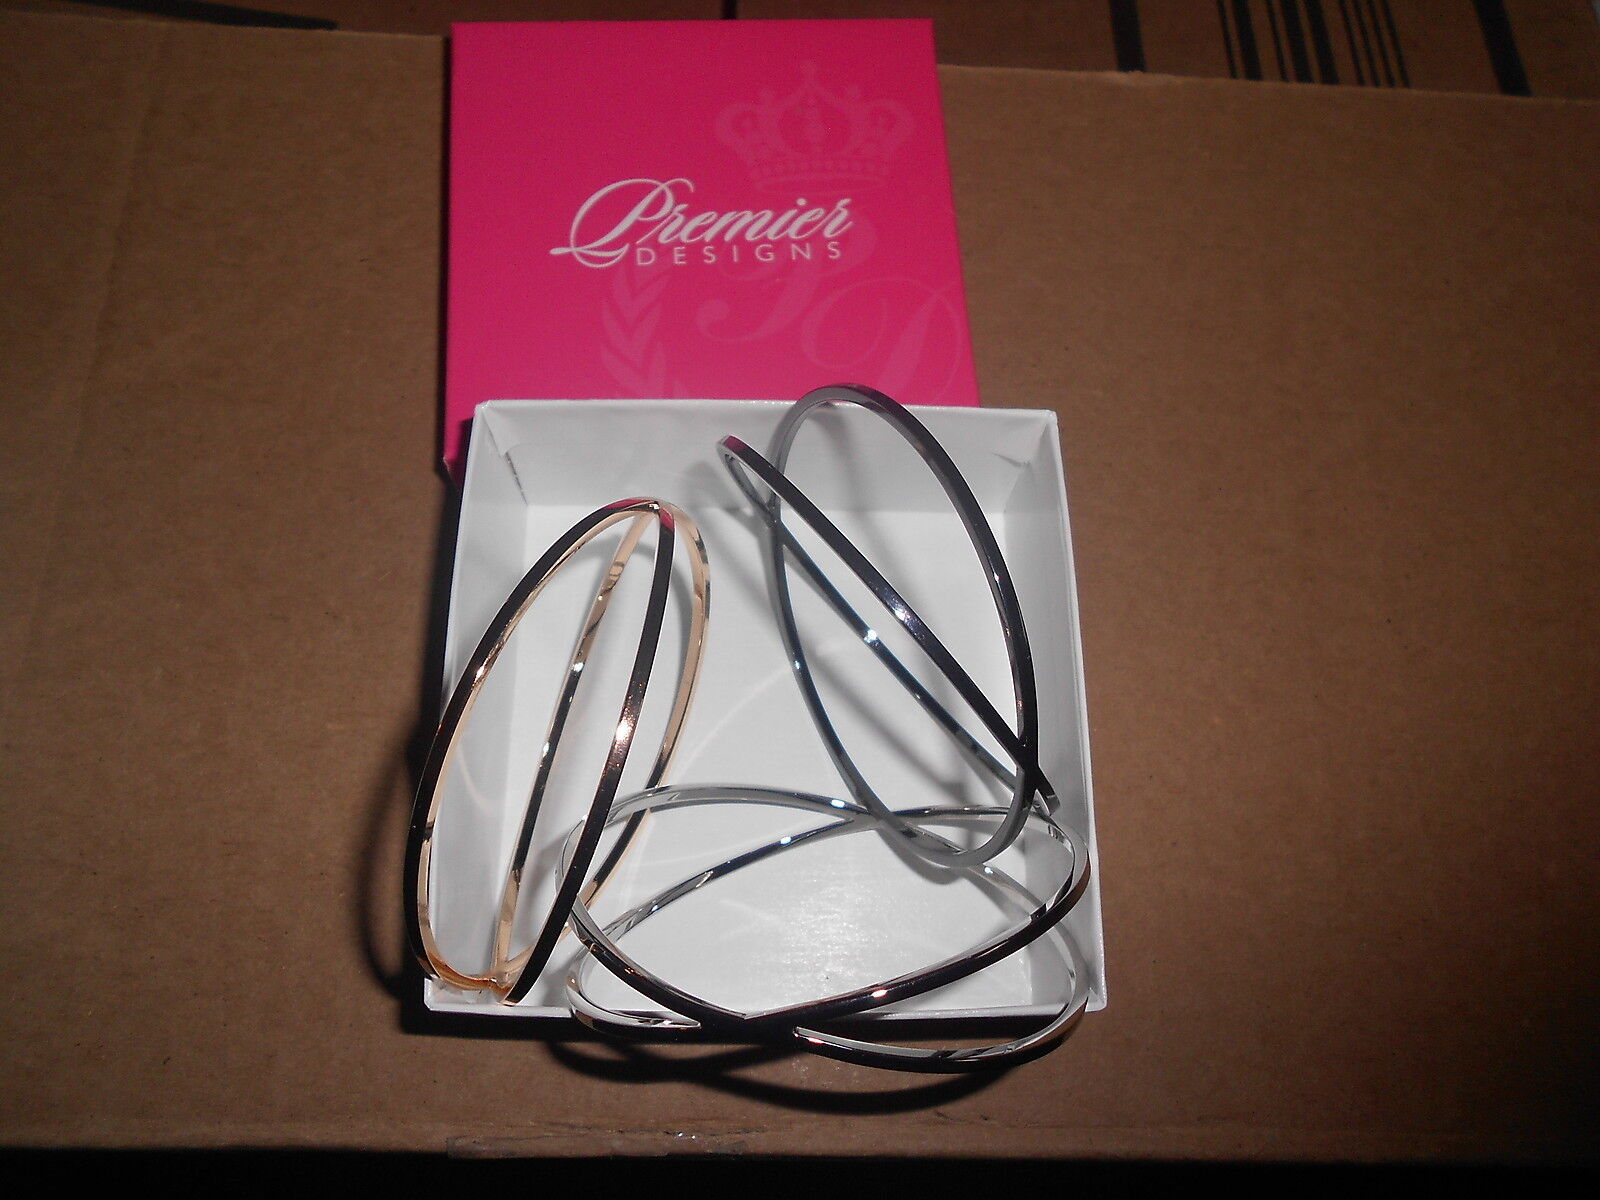 Premier Designs (new) Bracelet THREE'S COMPANY 8 1/4" BANGLE - set of 3 - $58.80